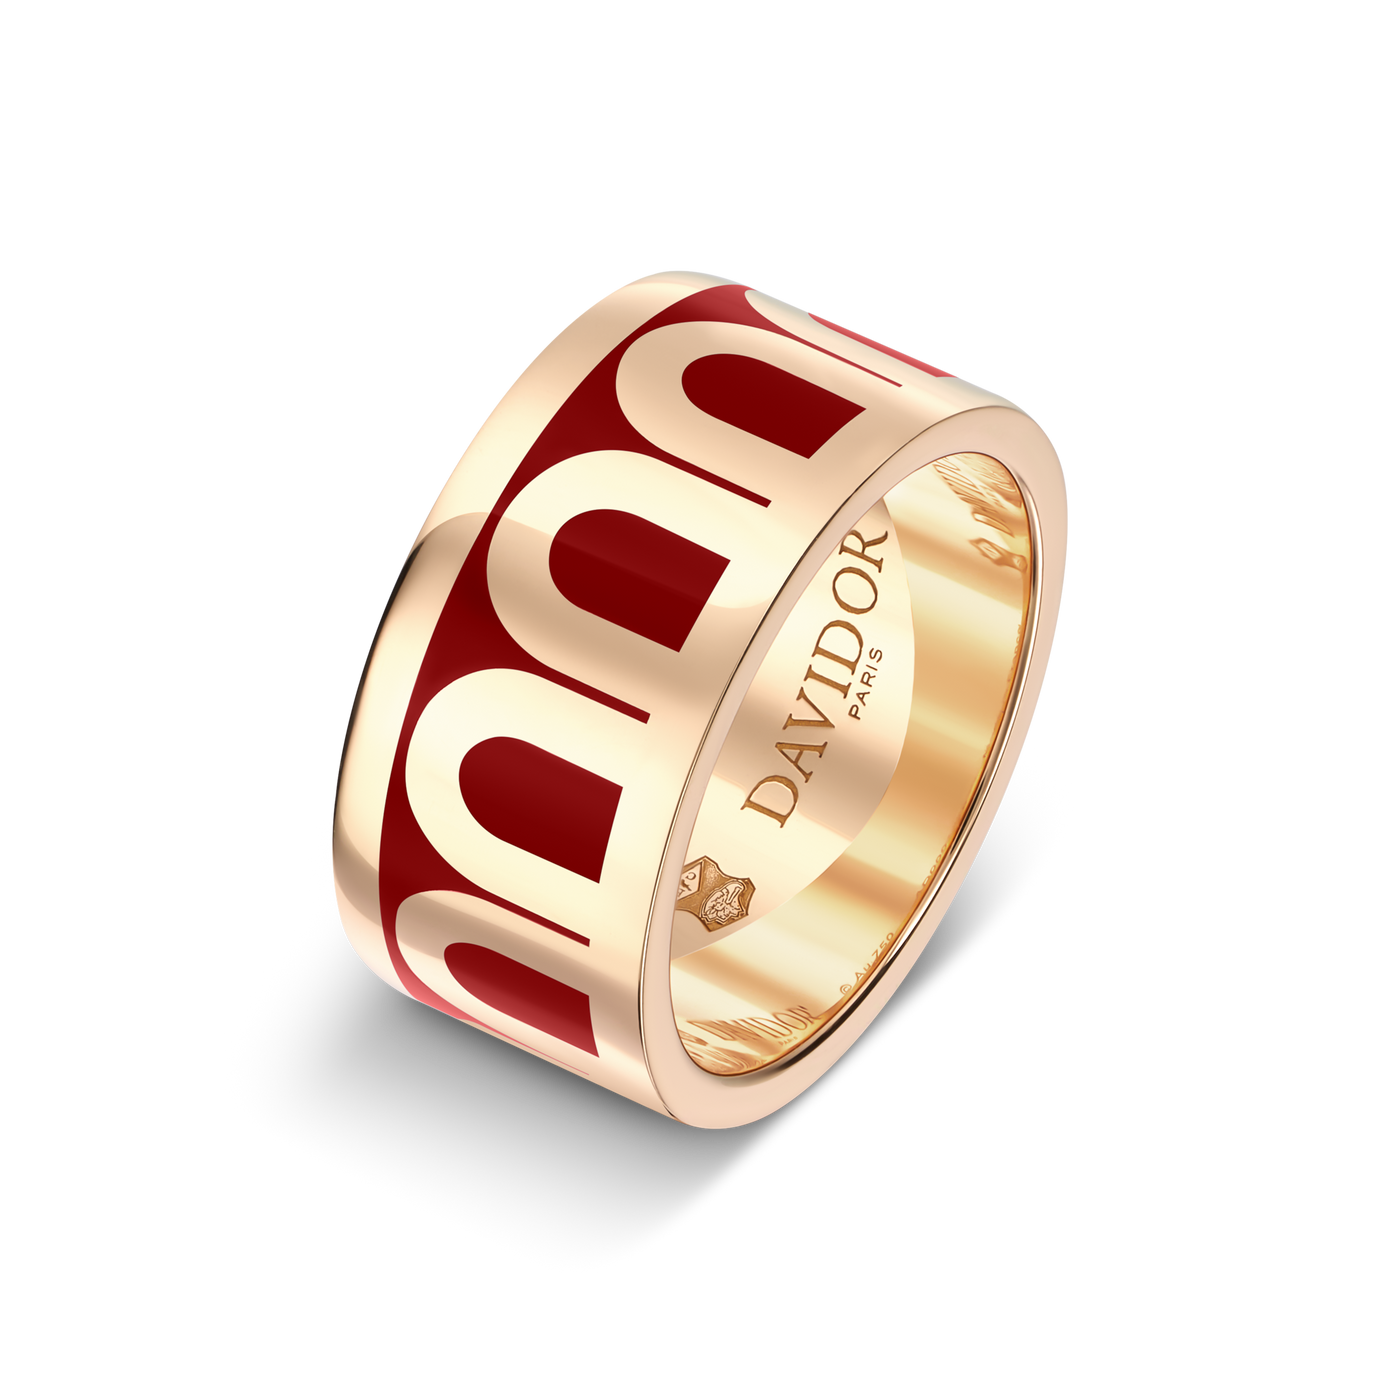 L'Arc de DAVIDOR Ring GM, 18k Rose Gold with Davidor Bordeaux Lacquered Ceramic - DAVIDOR